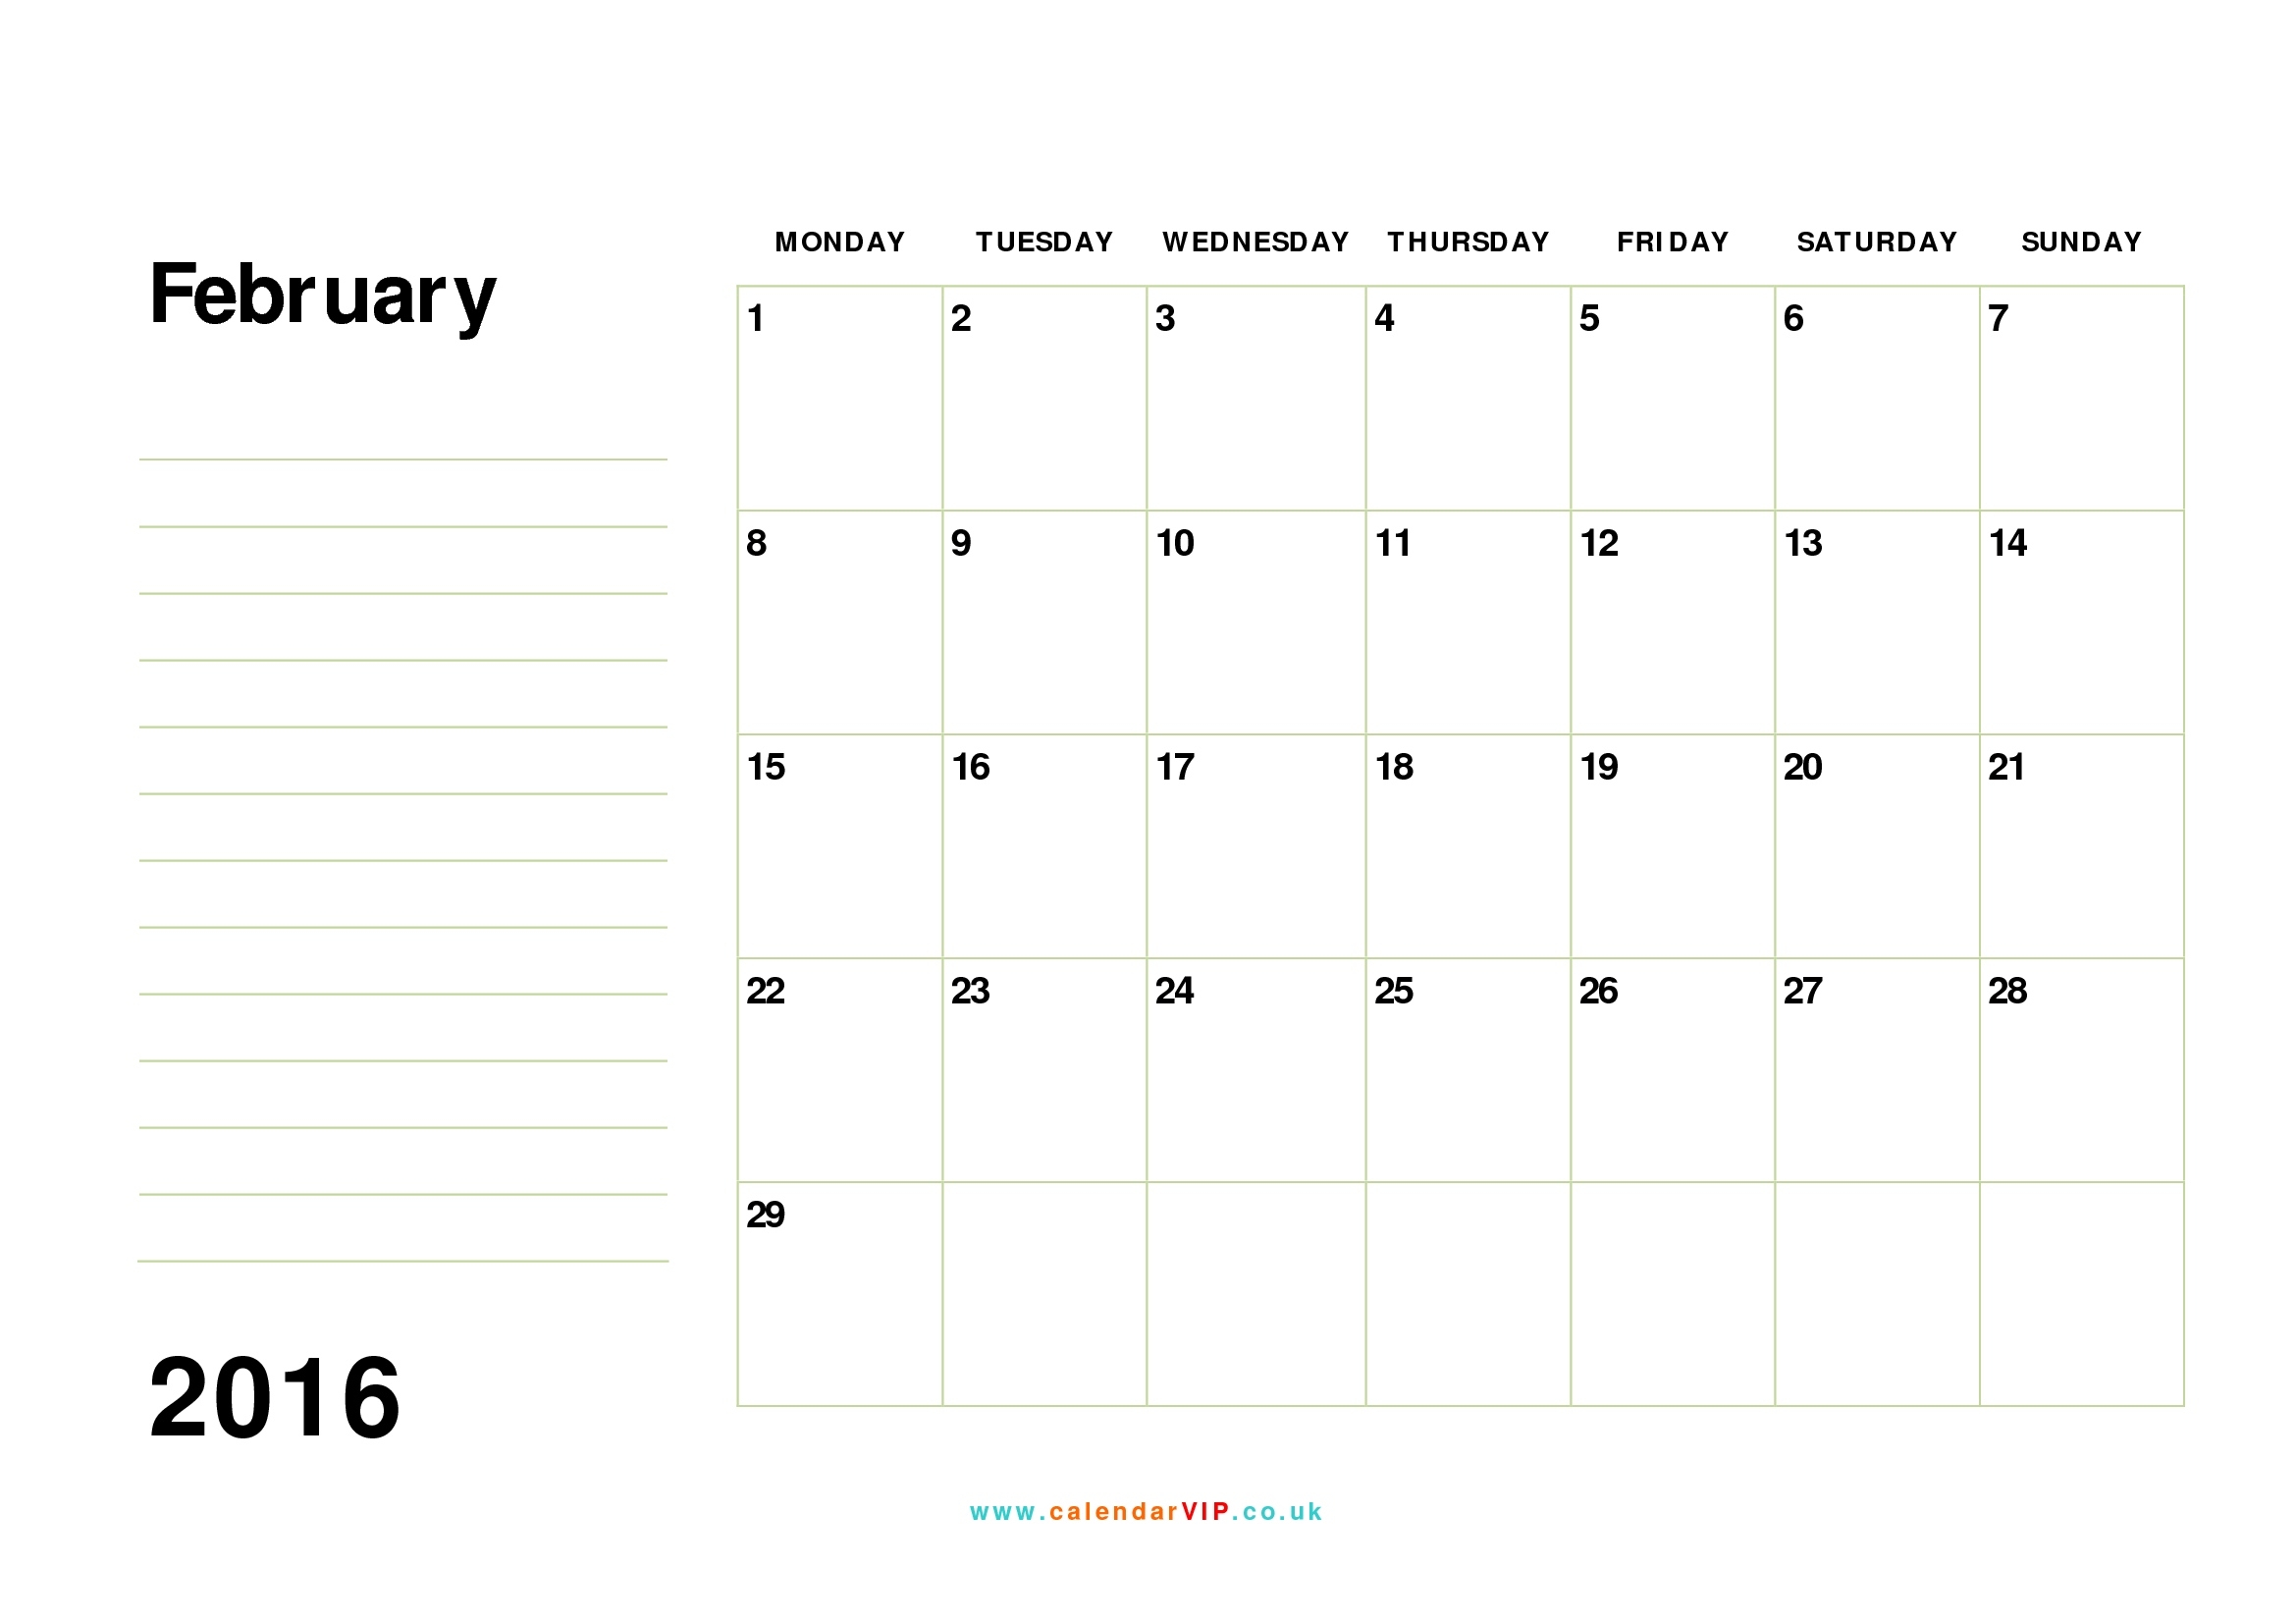 Calendar 2016 Uk - Free Yearly Calendar Templates For Uk Free Calendar Template Uk